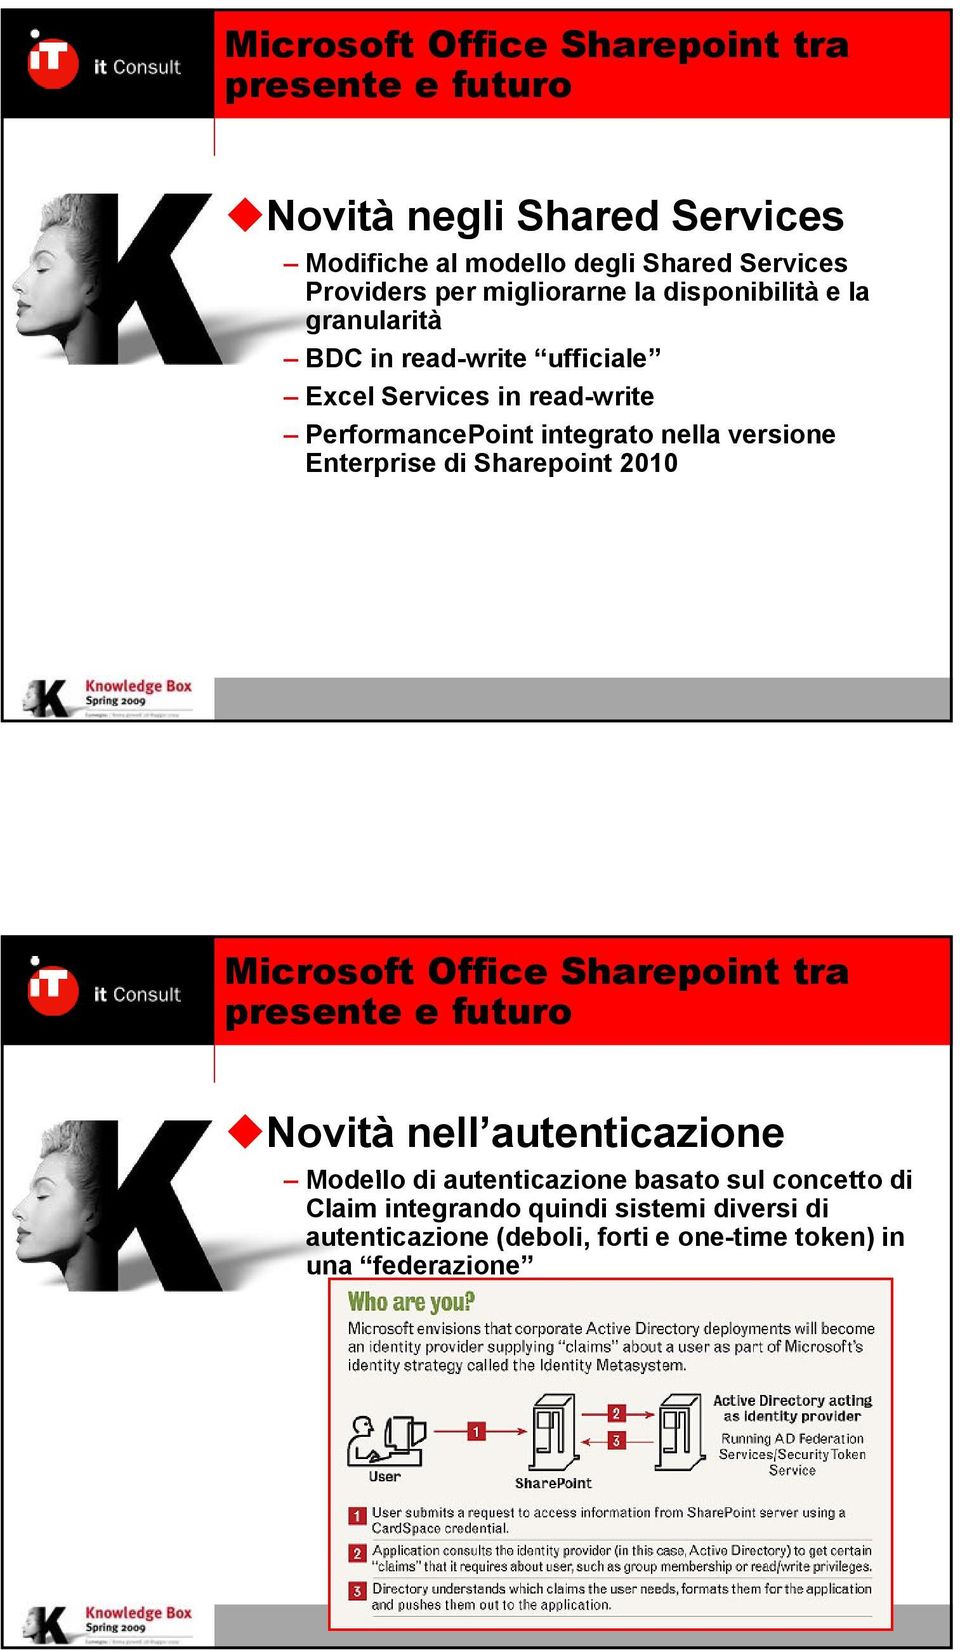 Enterprise di Sharepoint 2010 Novità nell autenticazione M d ll di t ti i b t l tt di Modello di autenticazione basato